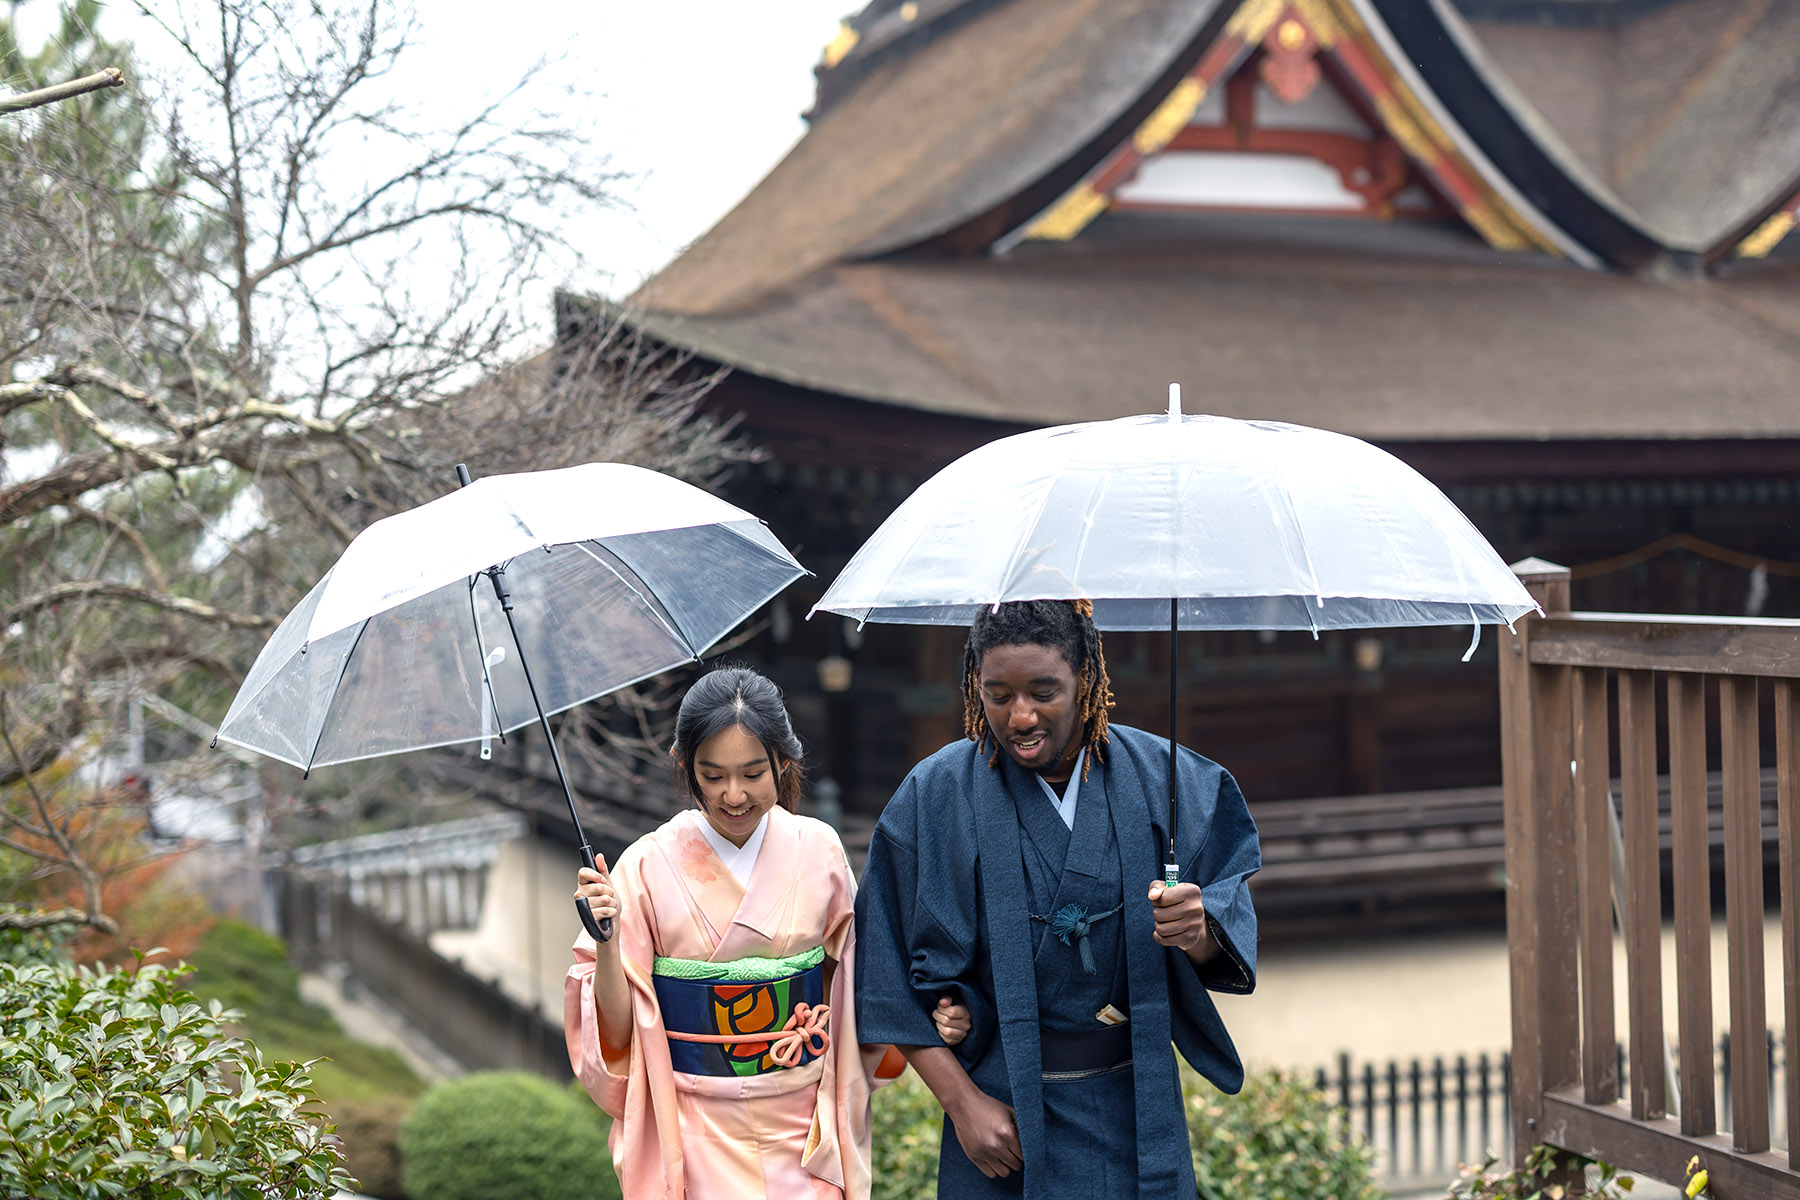 Cute couple wearing kimonos, walking arm in arm through the rain, holding umbrellas.